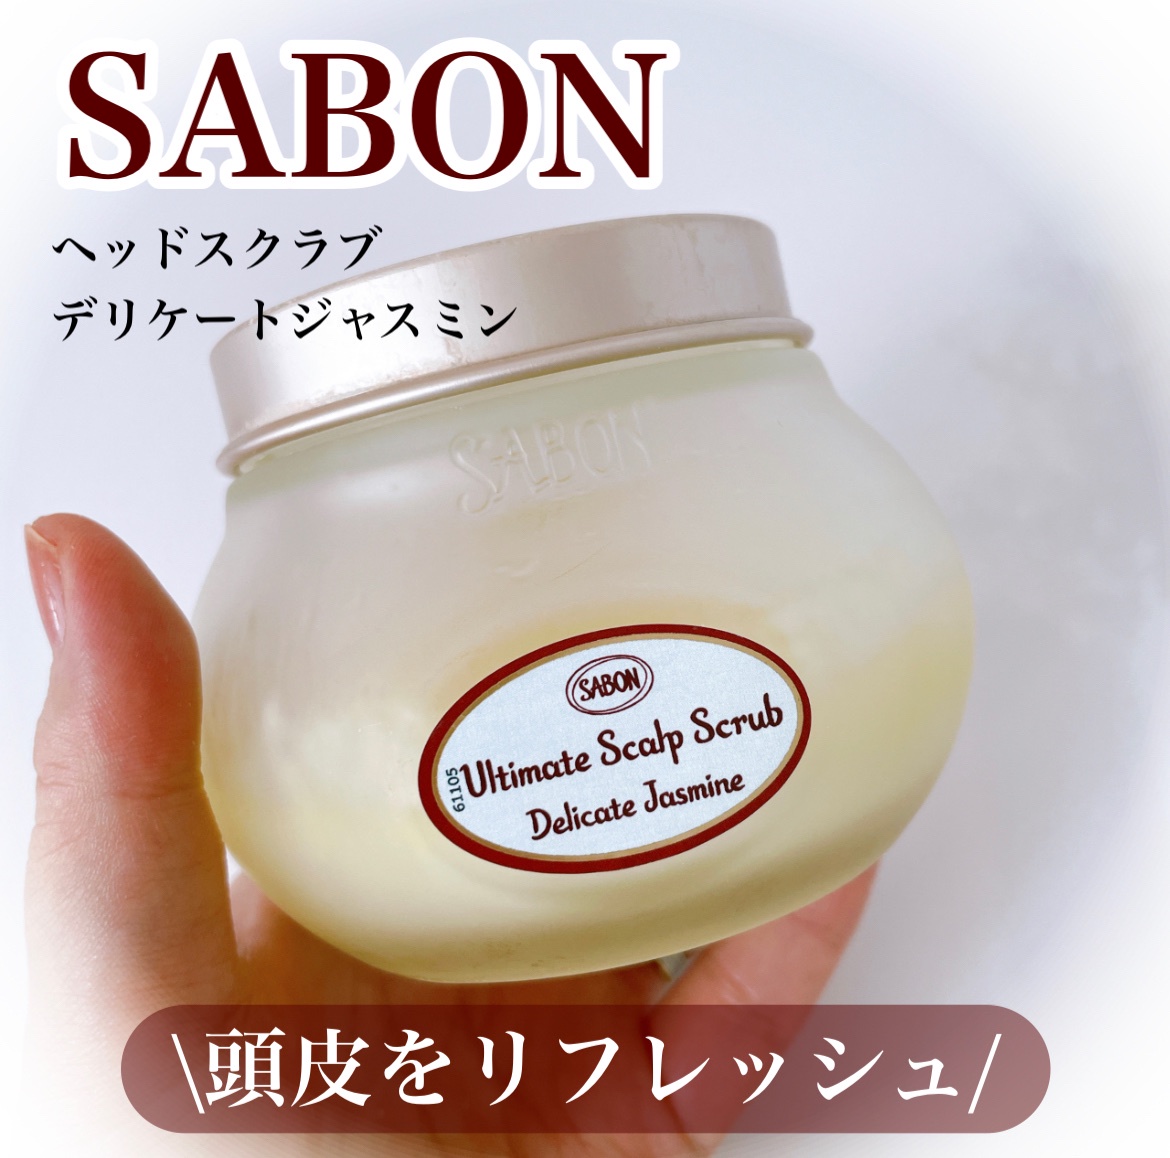 SABON(サボン) / ヘッドスクラブ デリケート・ジャスミンの公式商品